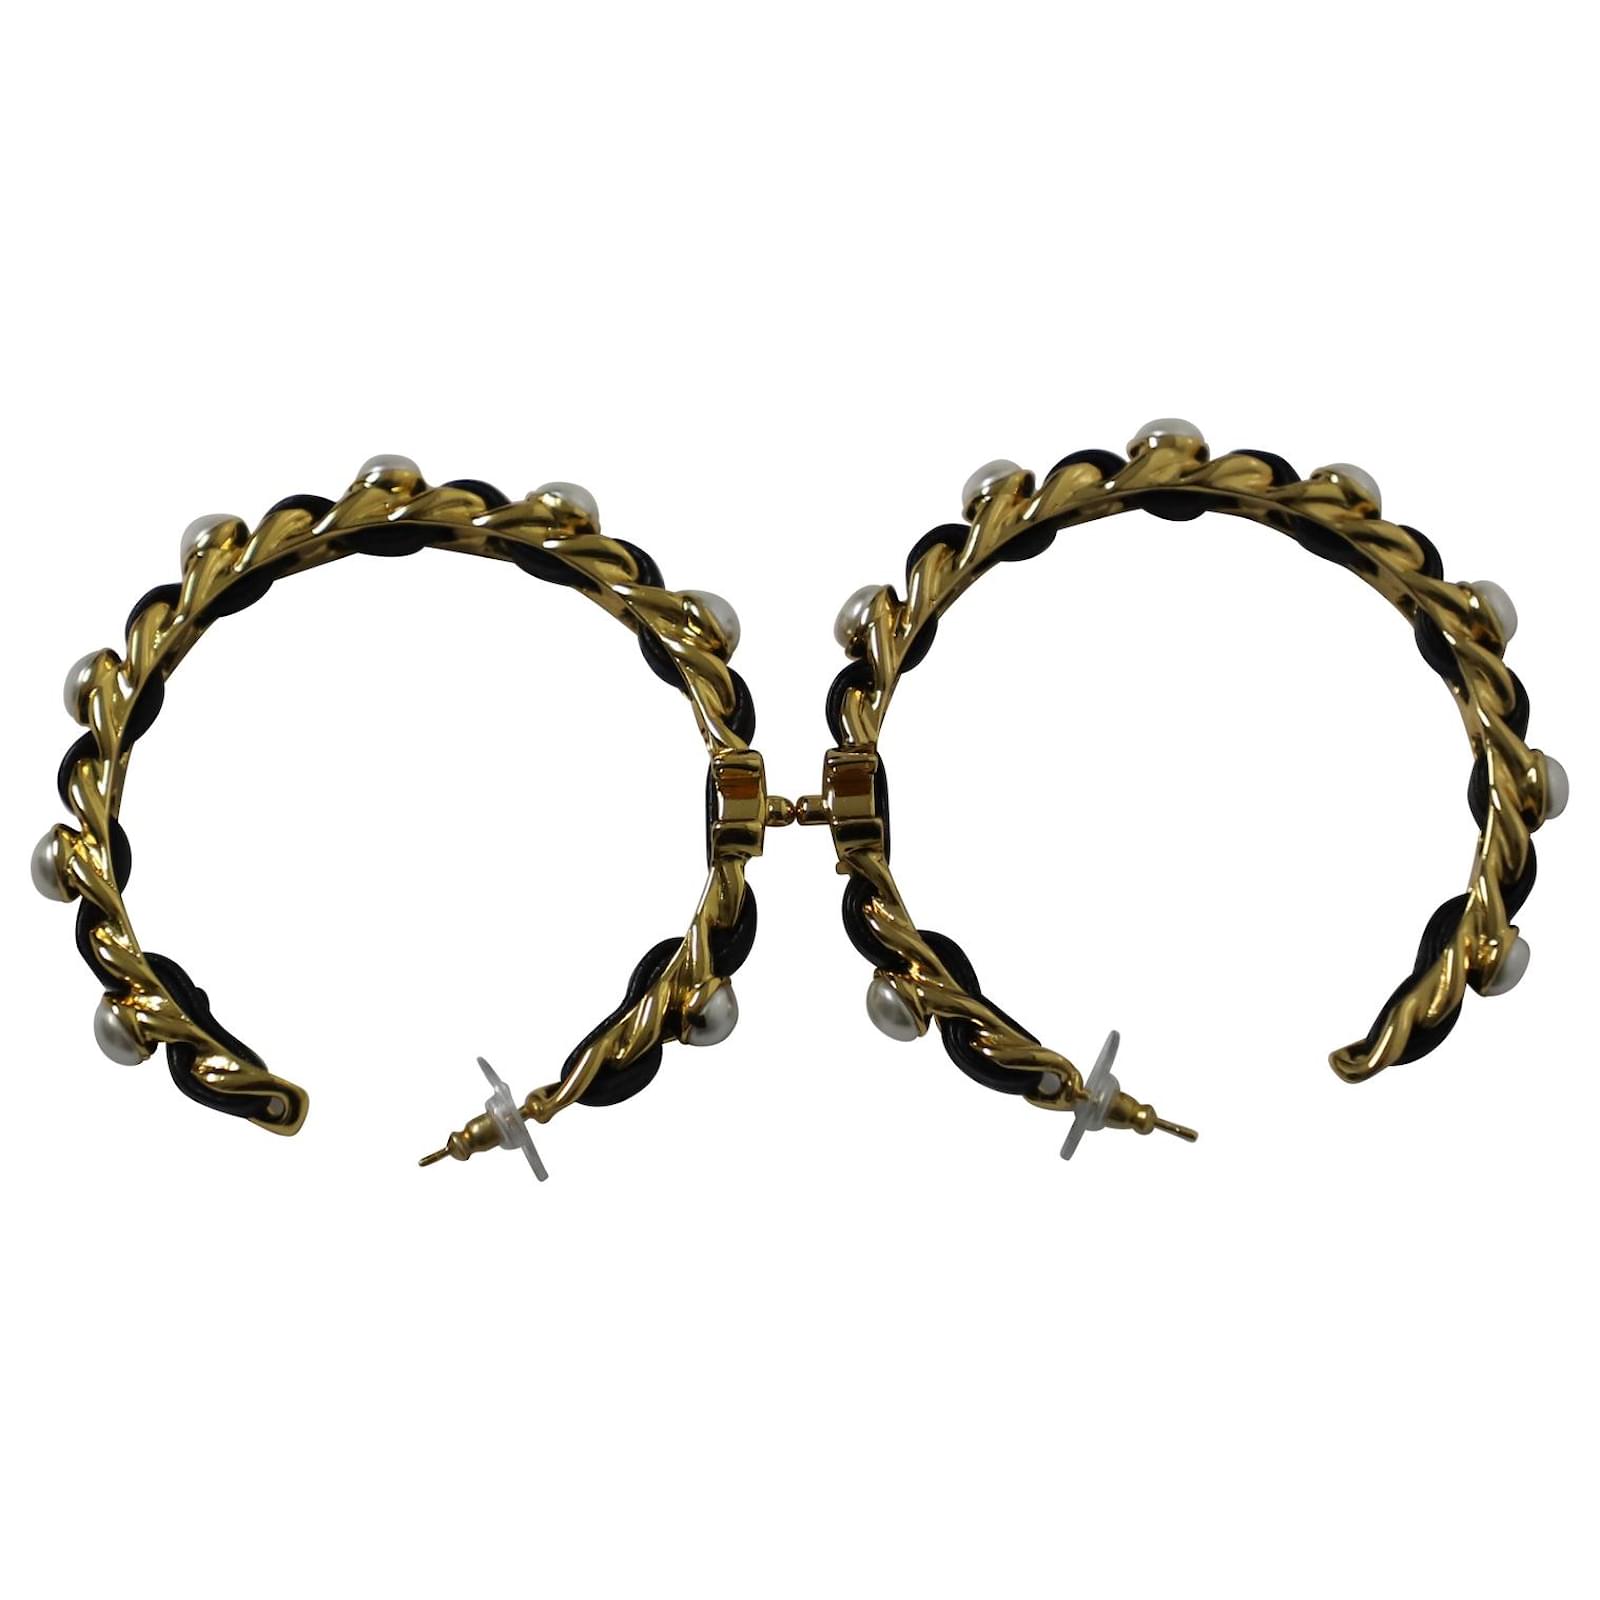 Chanel Faux Pearl & Leather Chain Hoop Earrings in Gold Metal